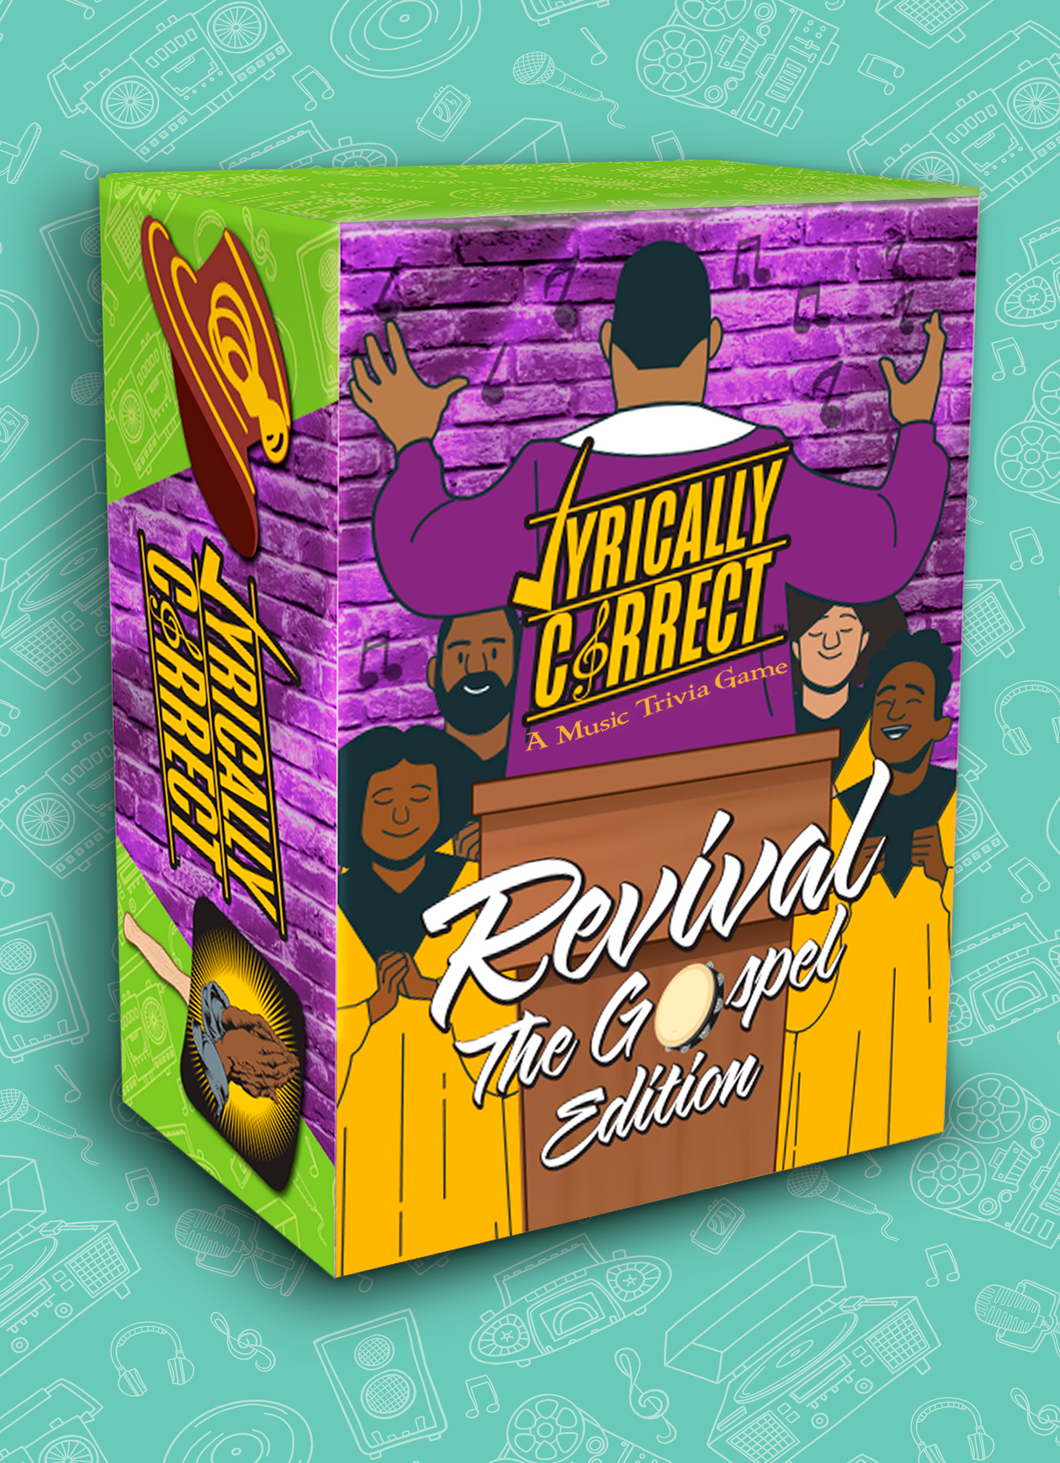 Revival: The Gospel Edition